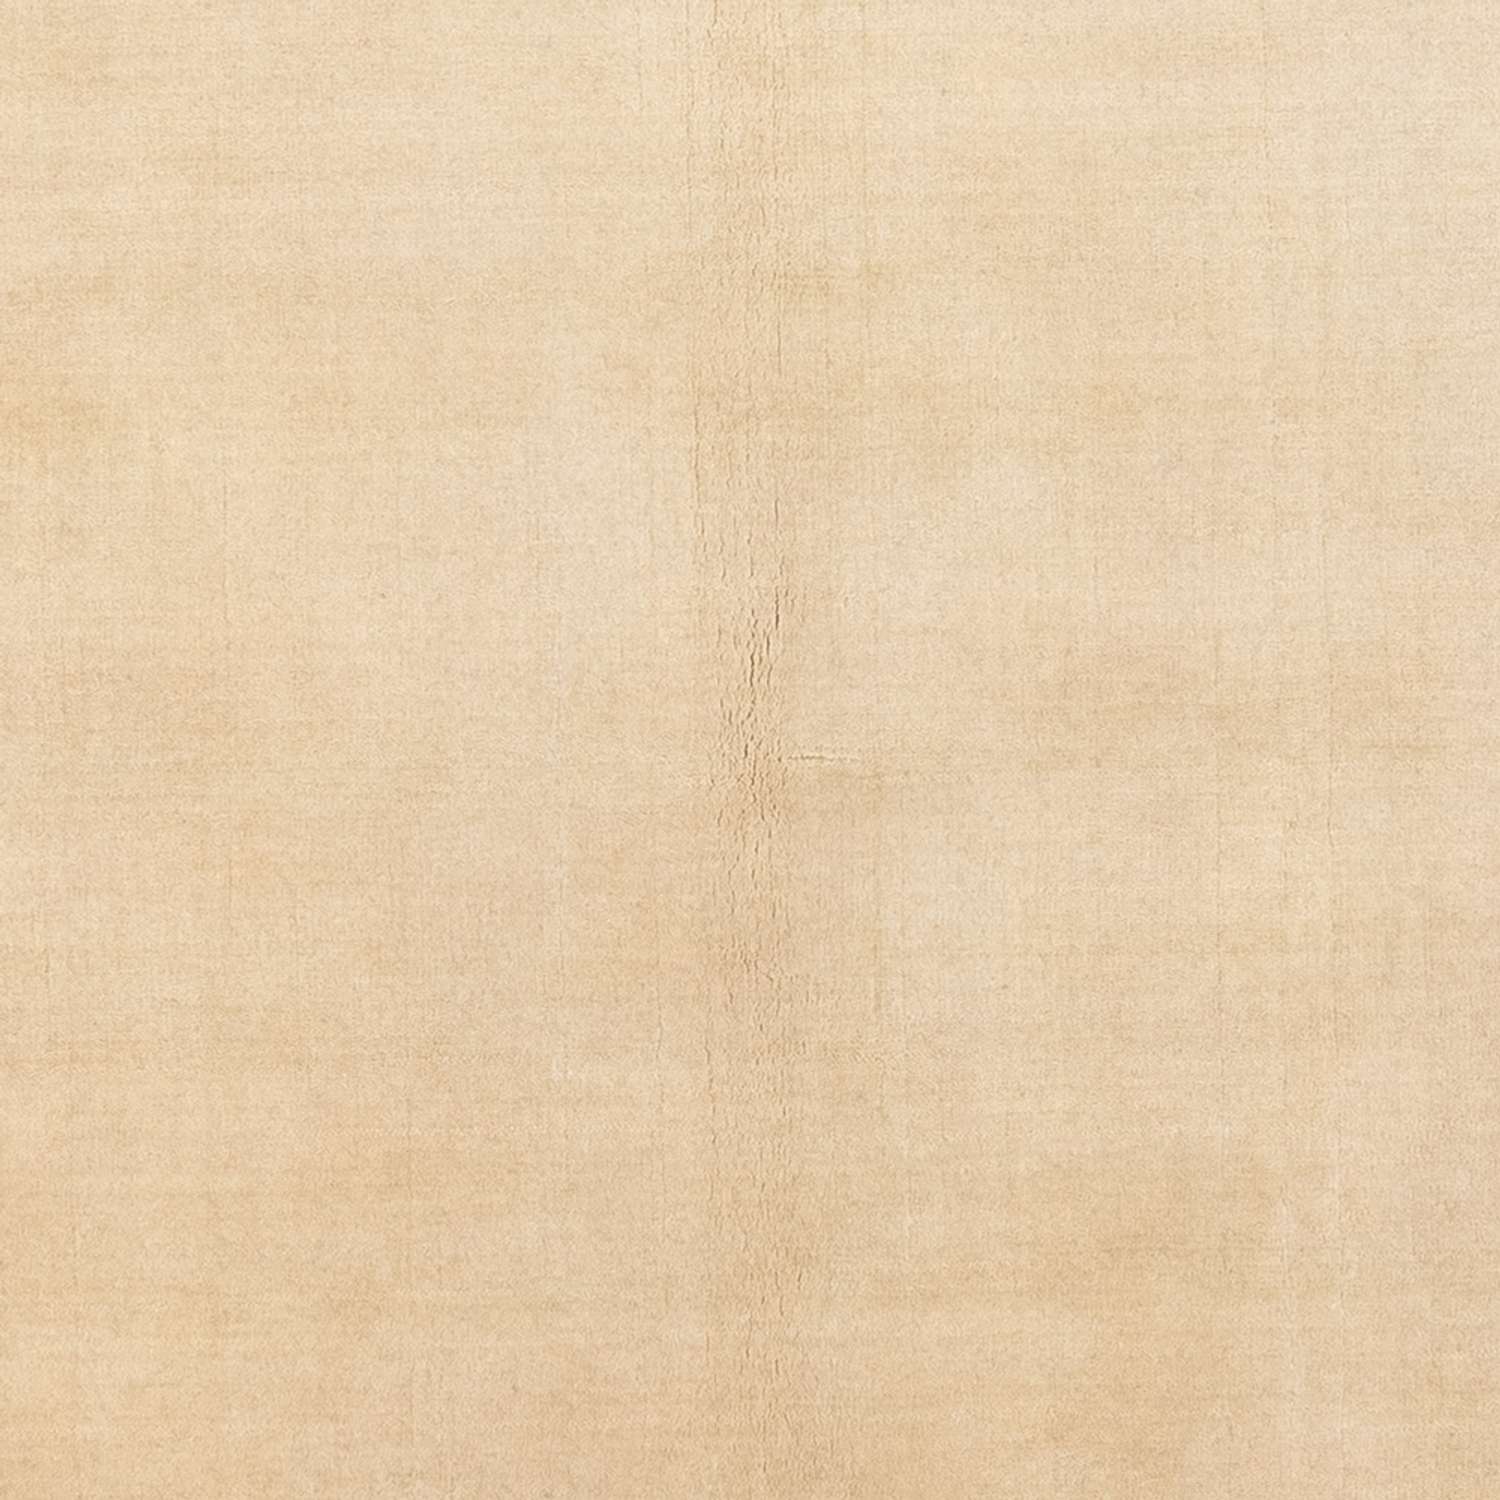 Gabbeh koberec - Loribaft Softy - 182 x 125 cm - světle béžová